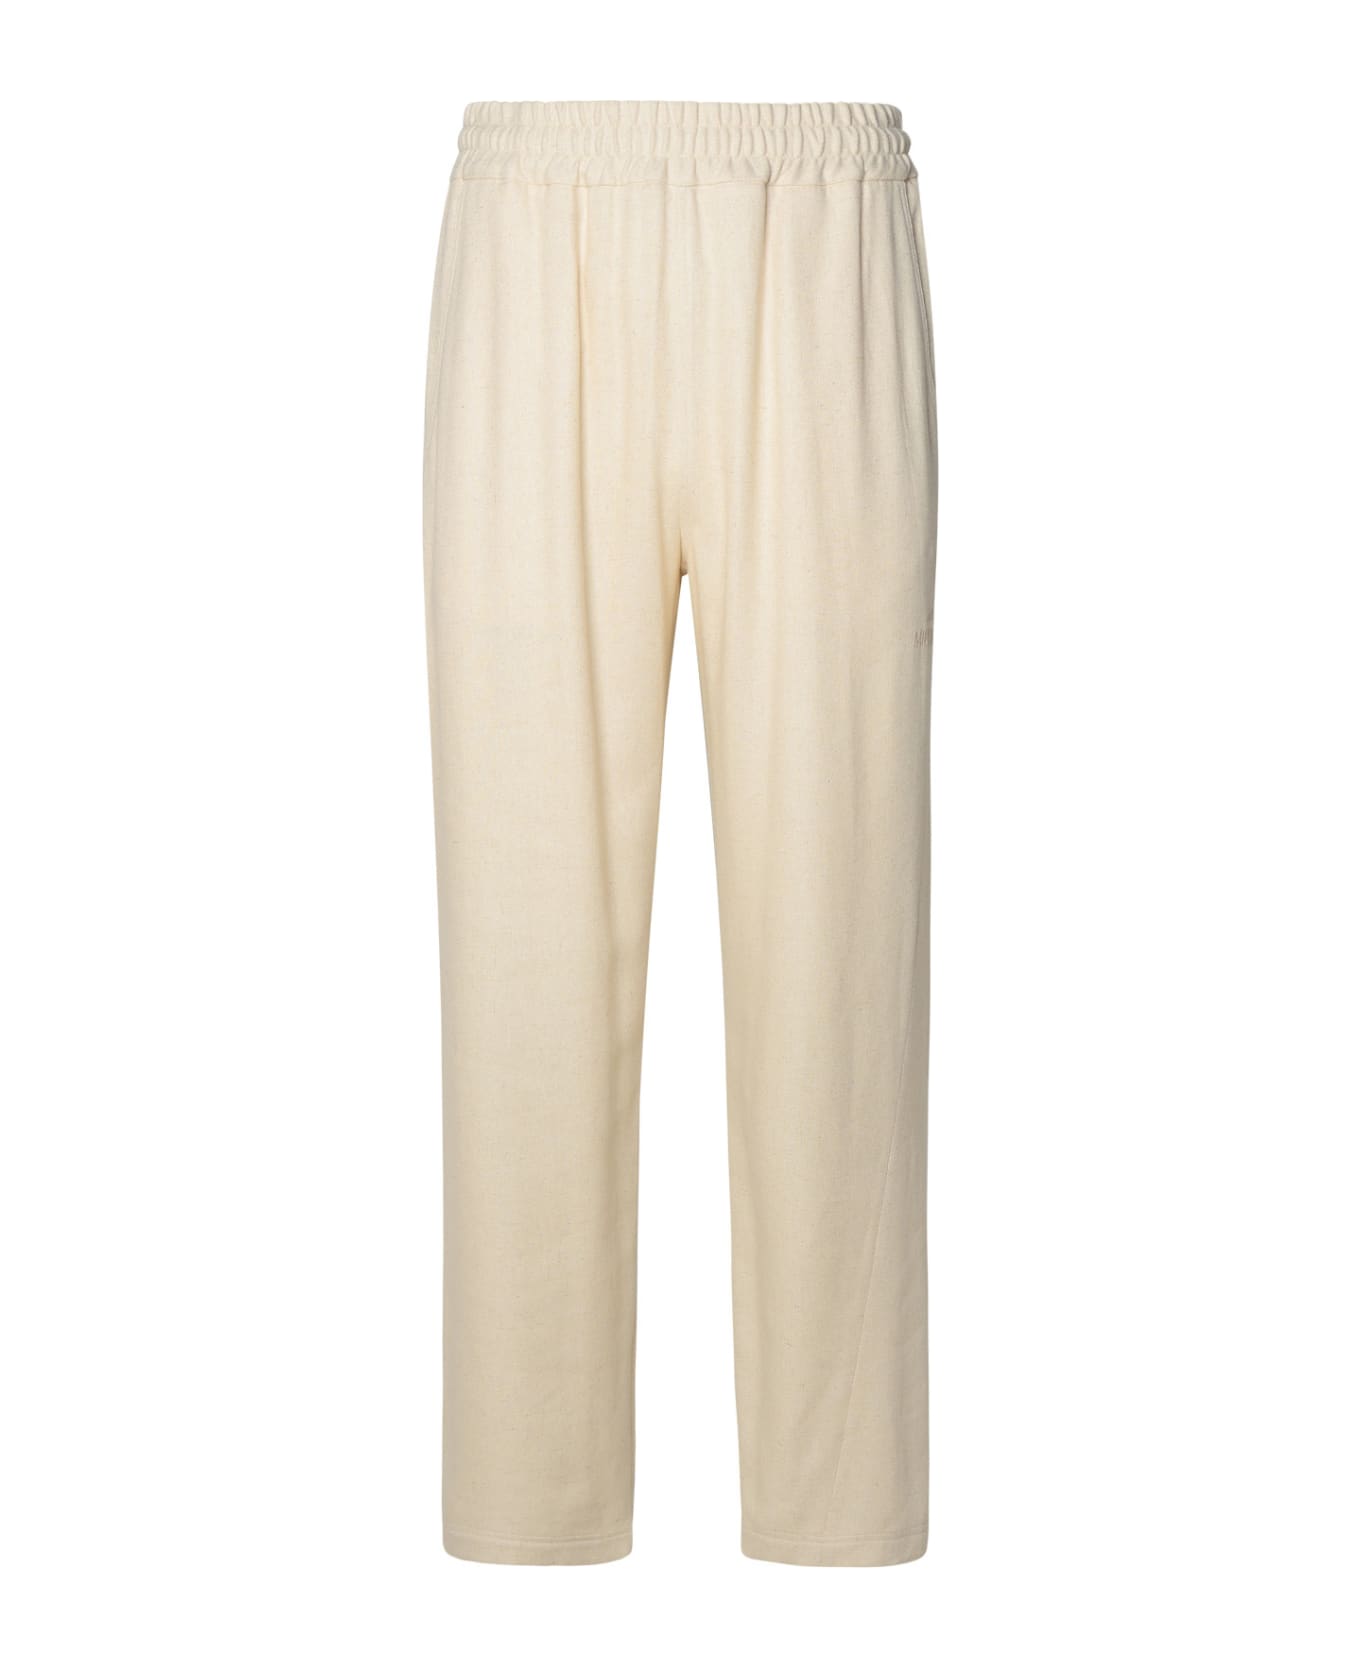 GCDS Ivory Linen Blend Trousers - Ivory